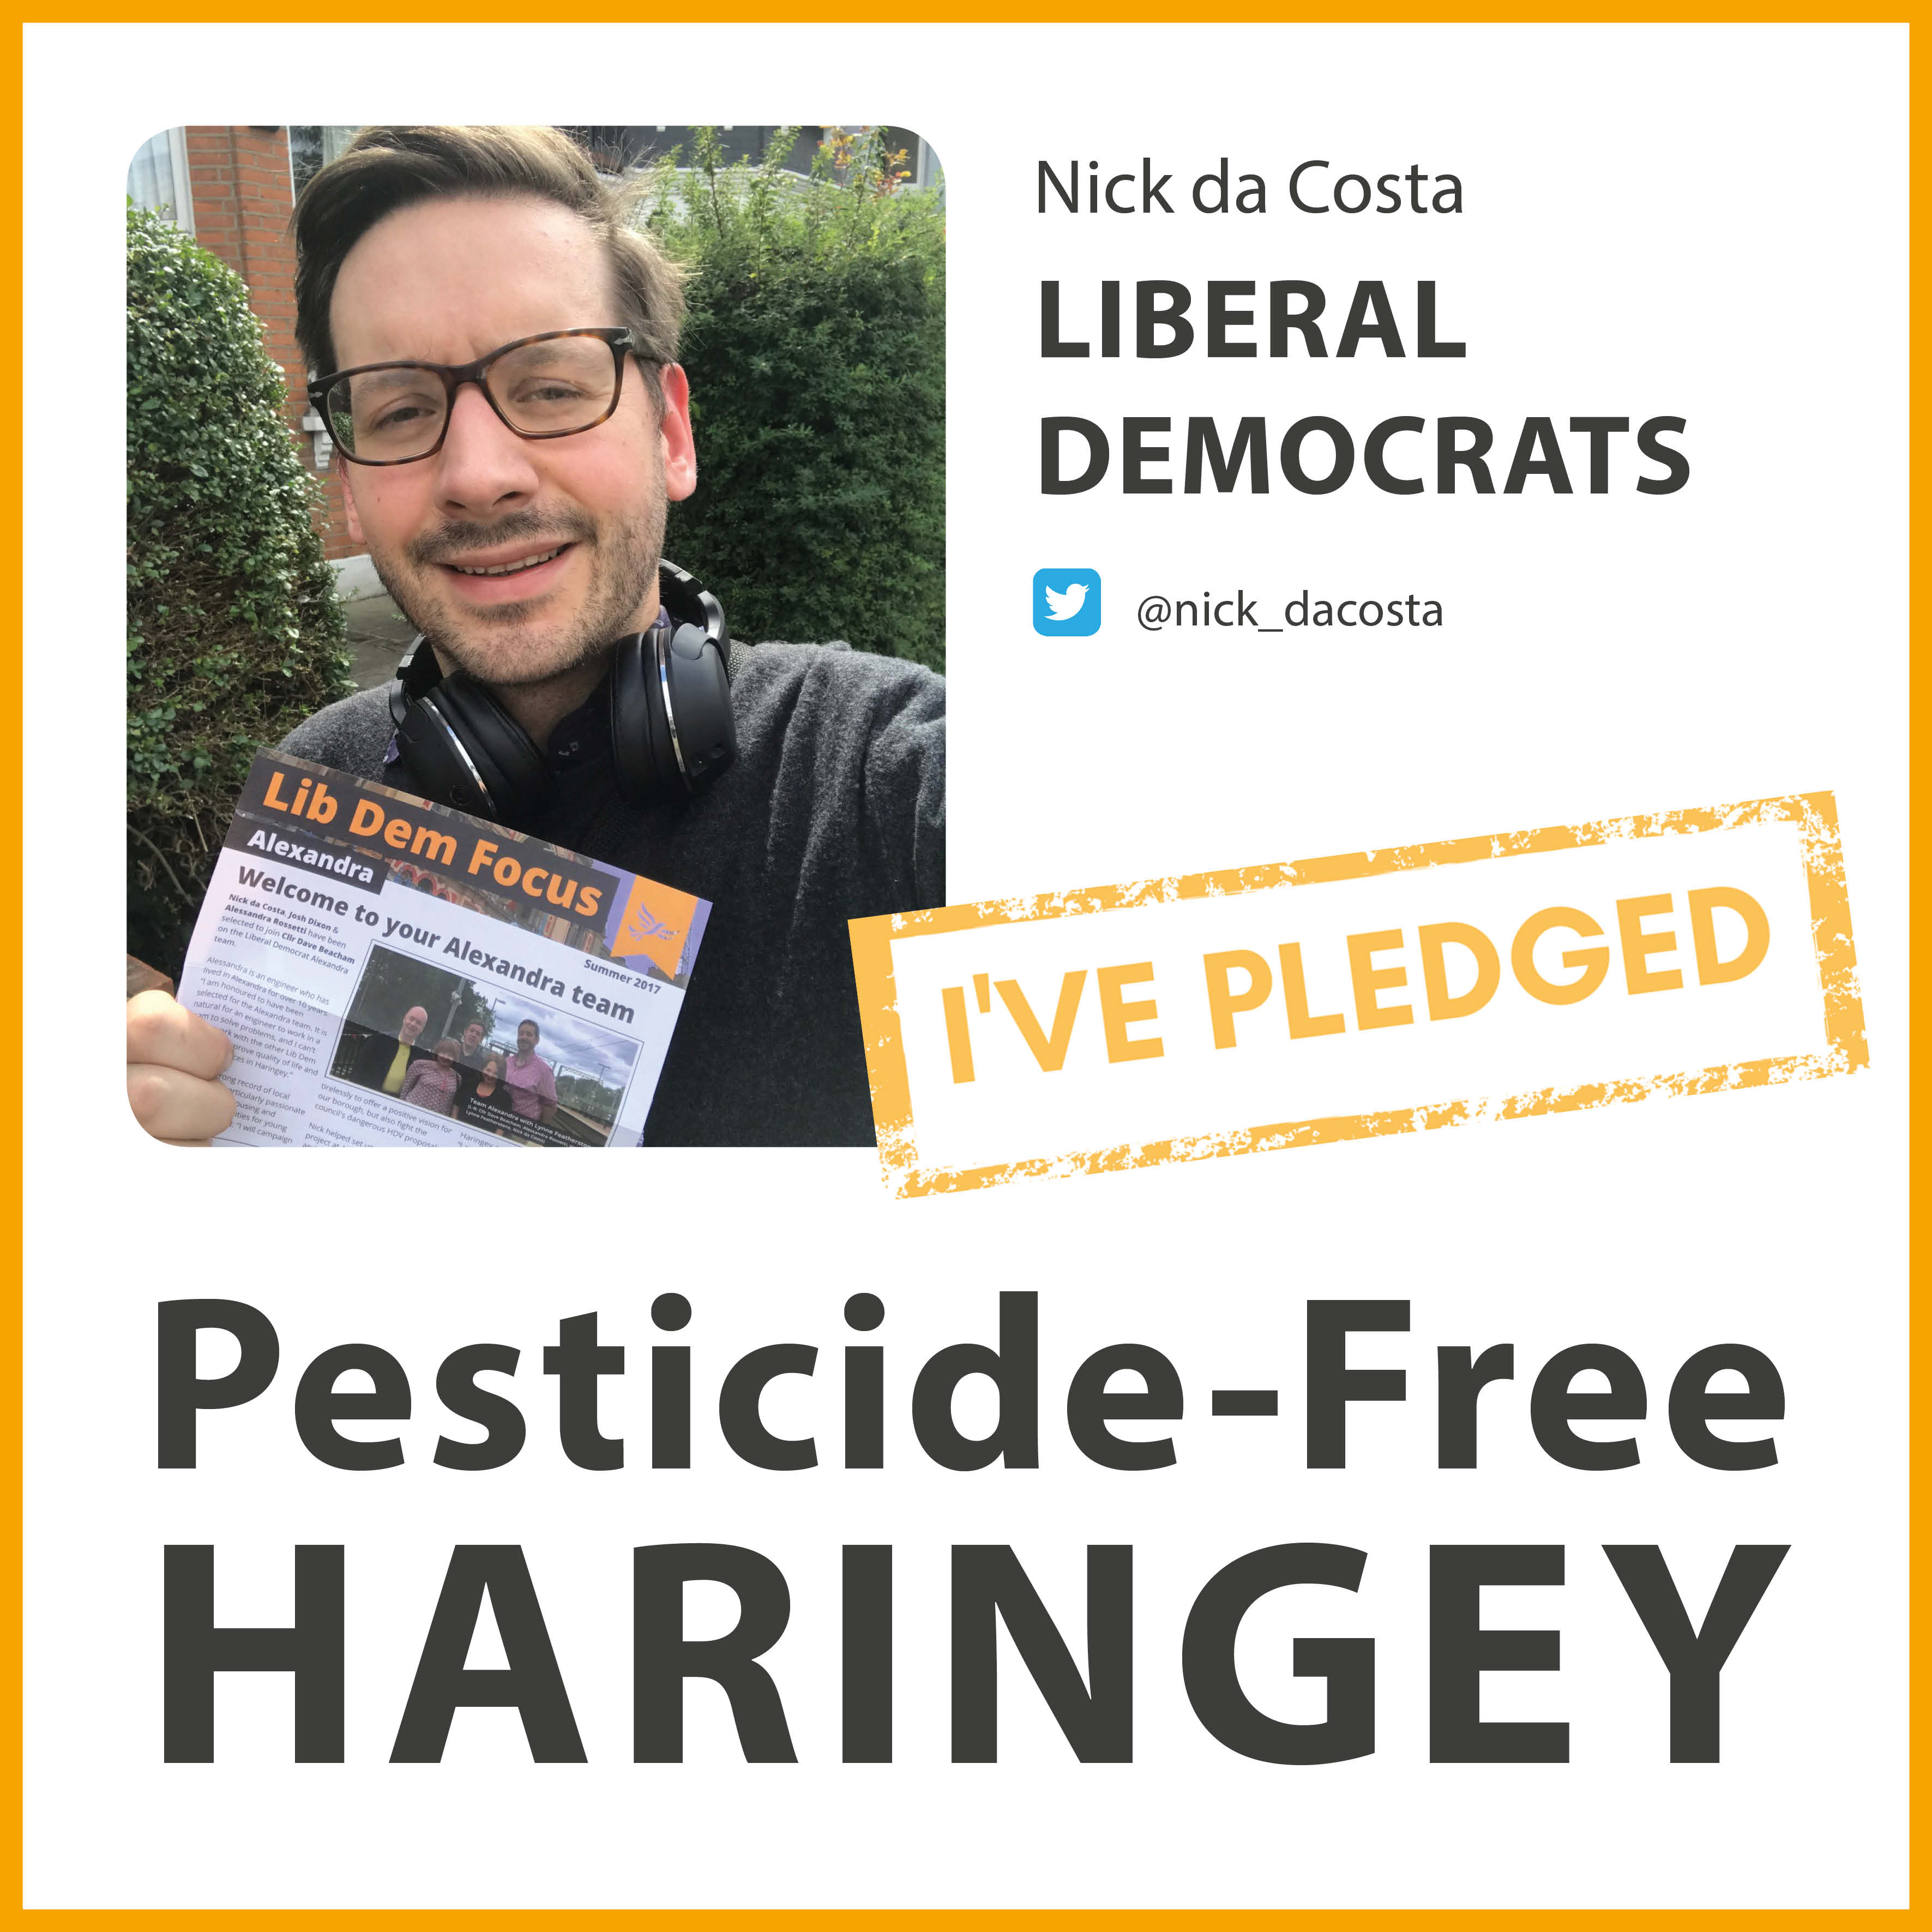 Nick da Costa has taken the pesticide-free pledge in Haringey